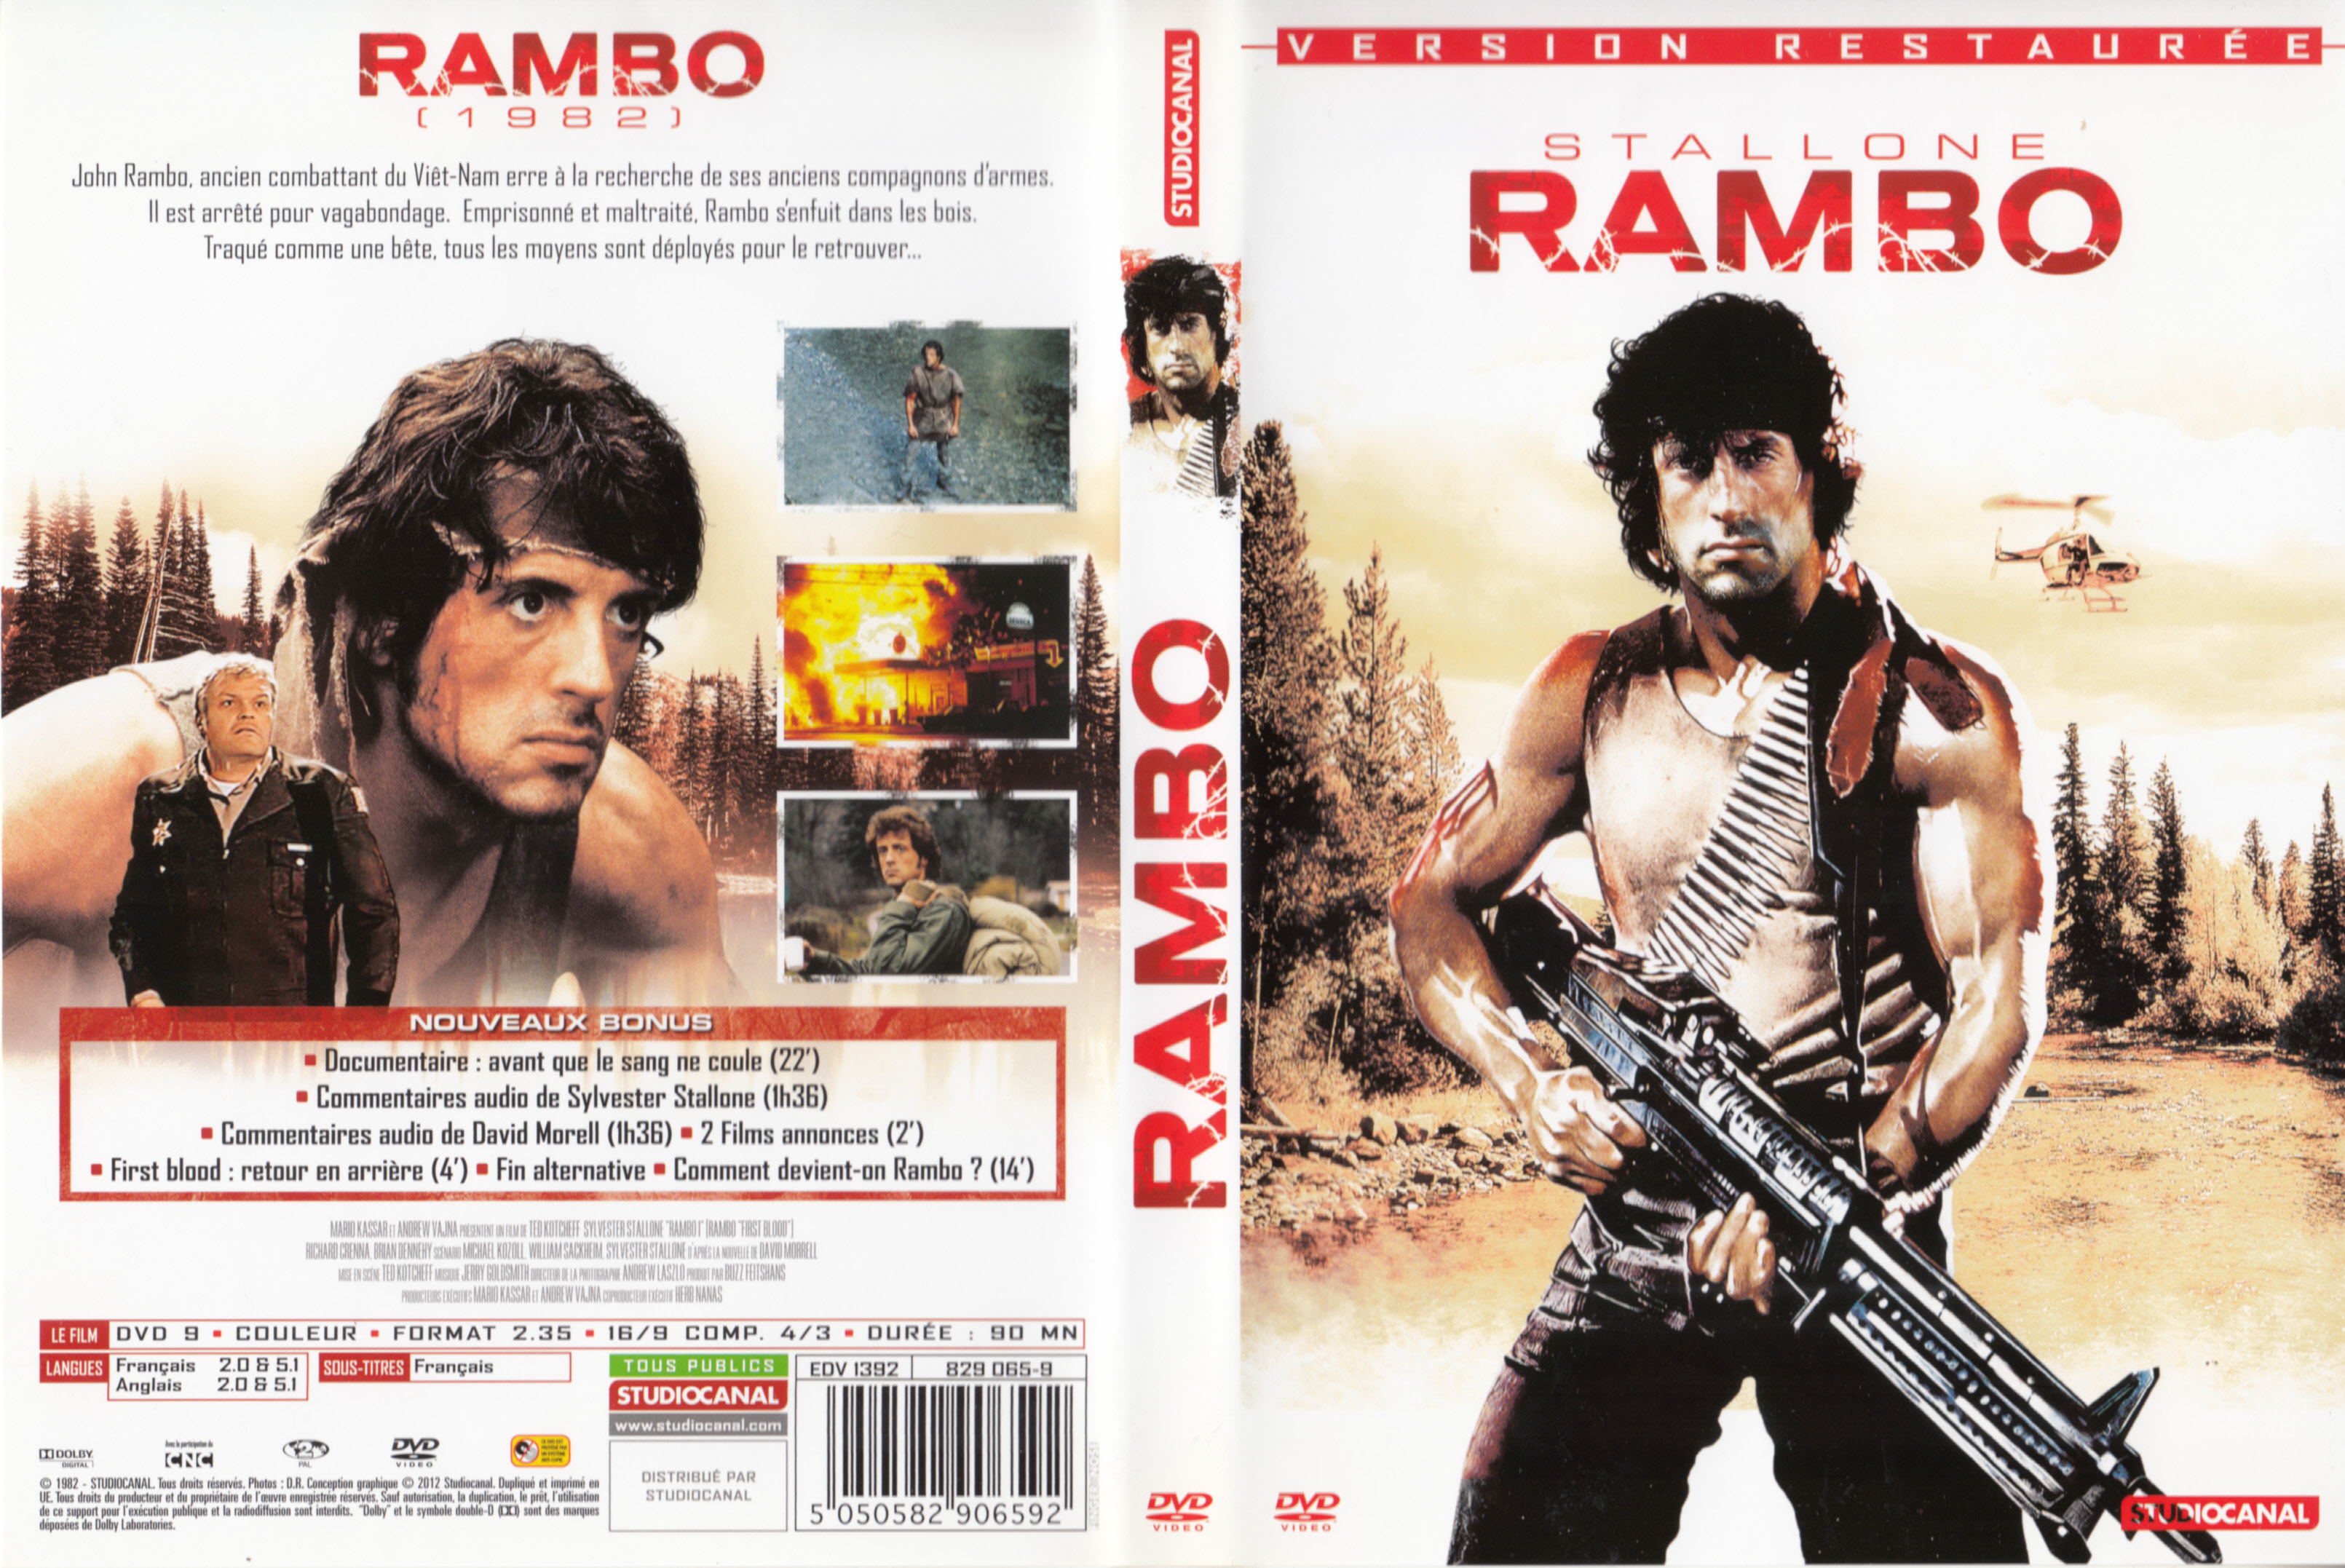 Jaquette DVD Rambo v3